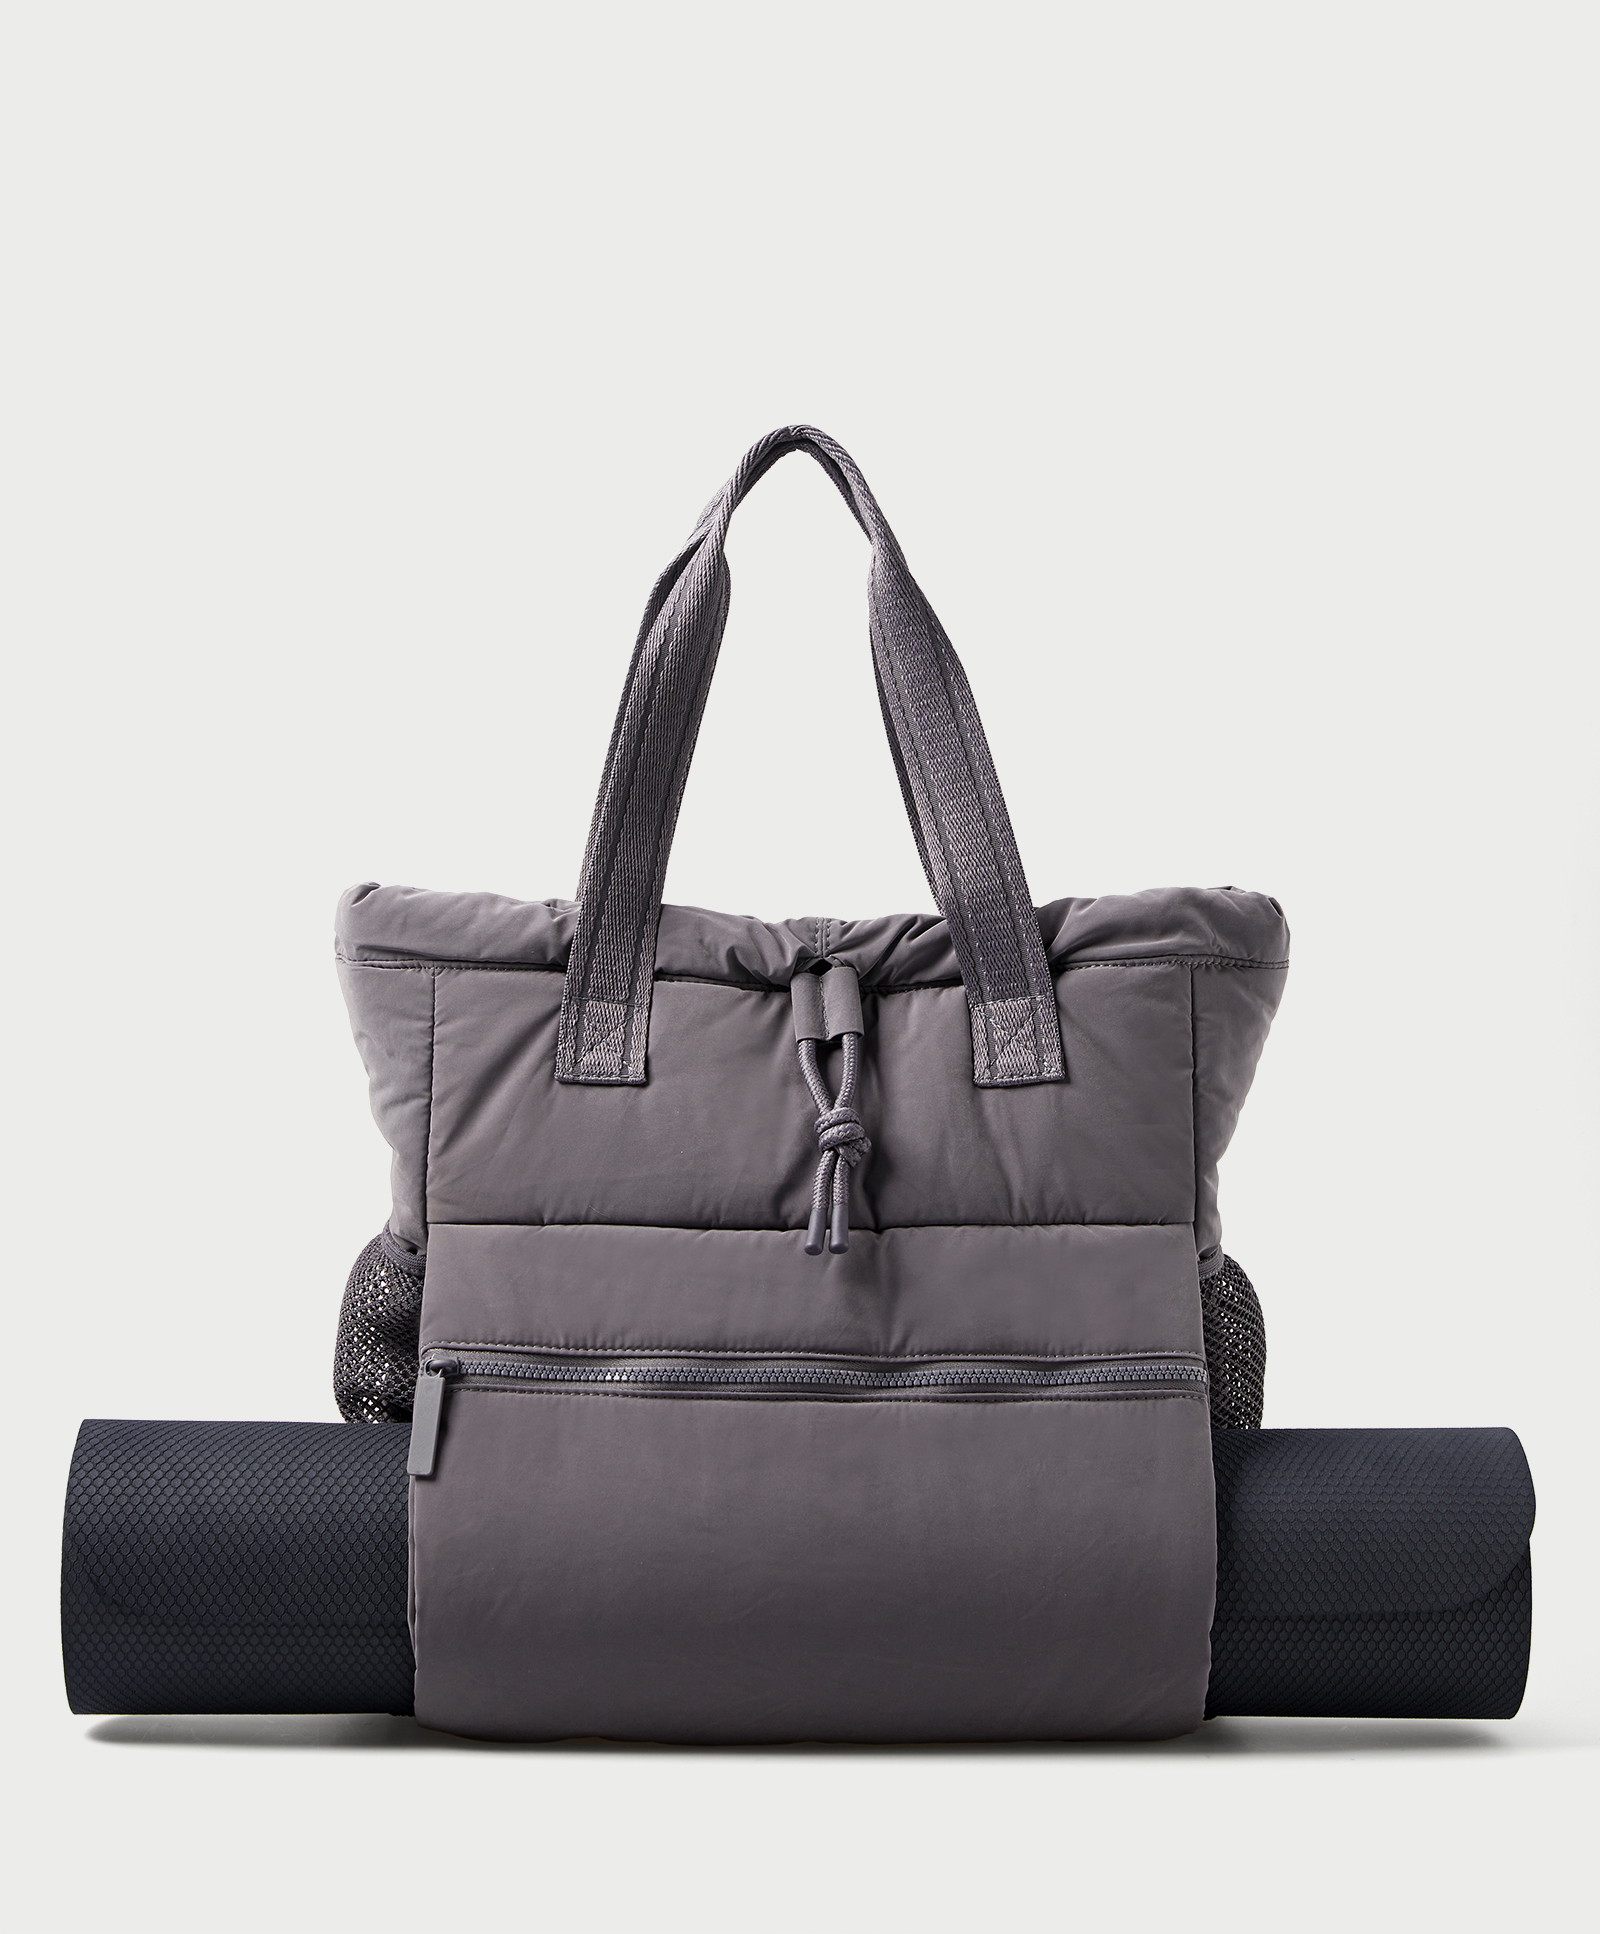 Convertible bag-backpack